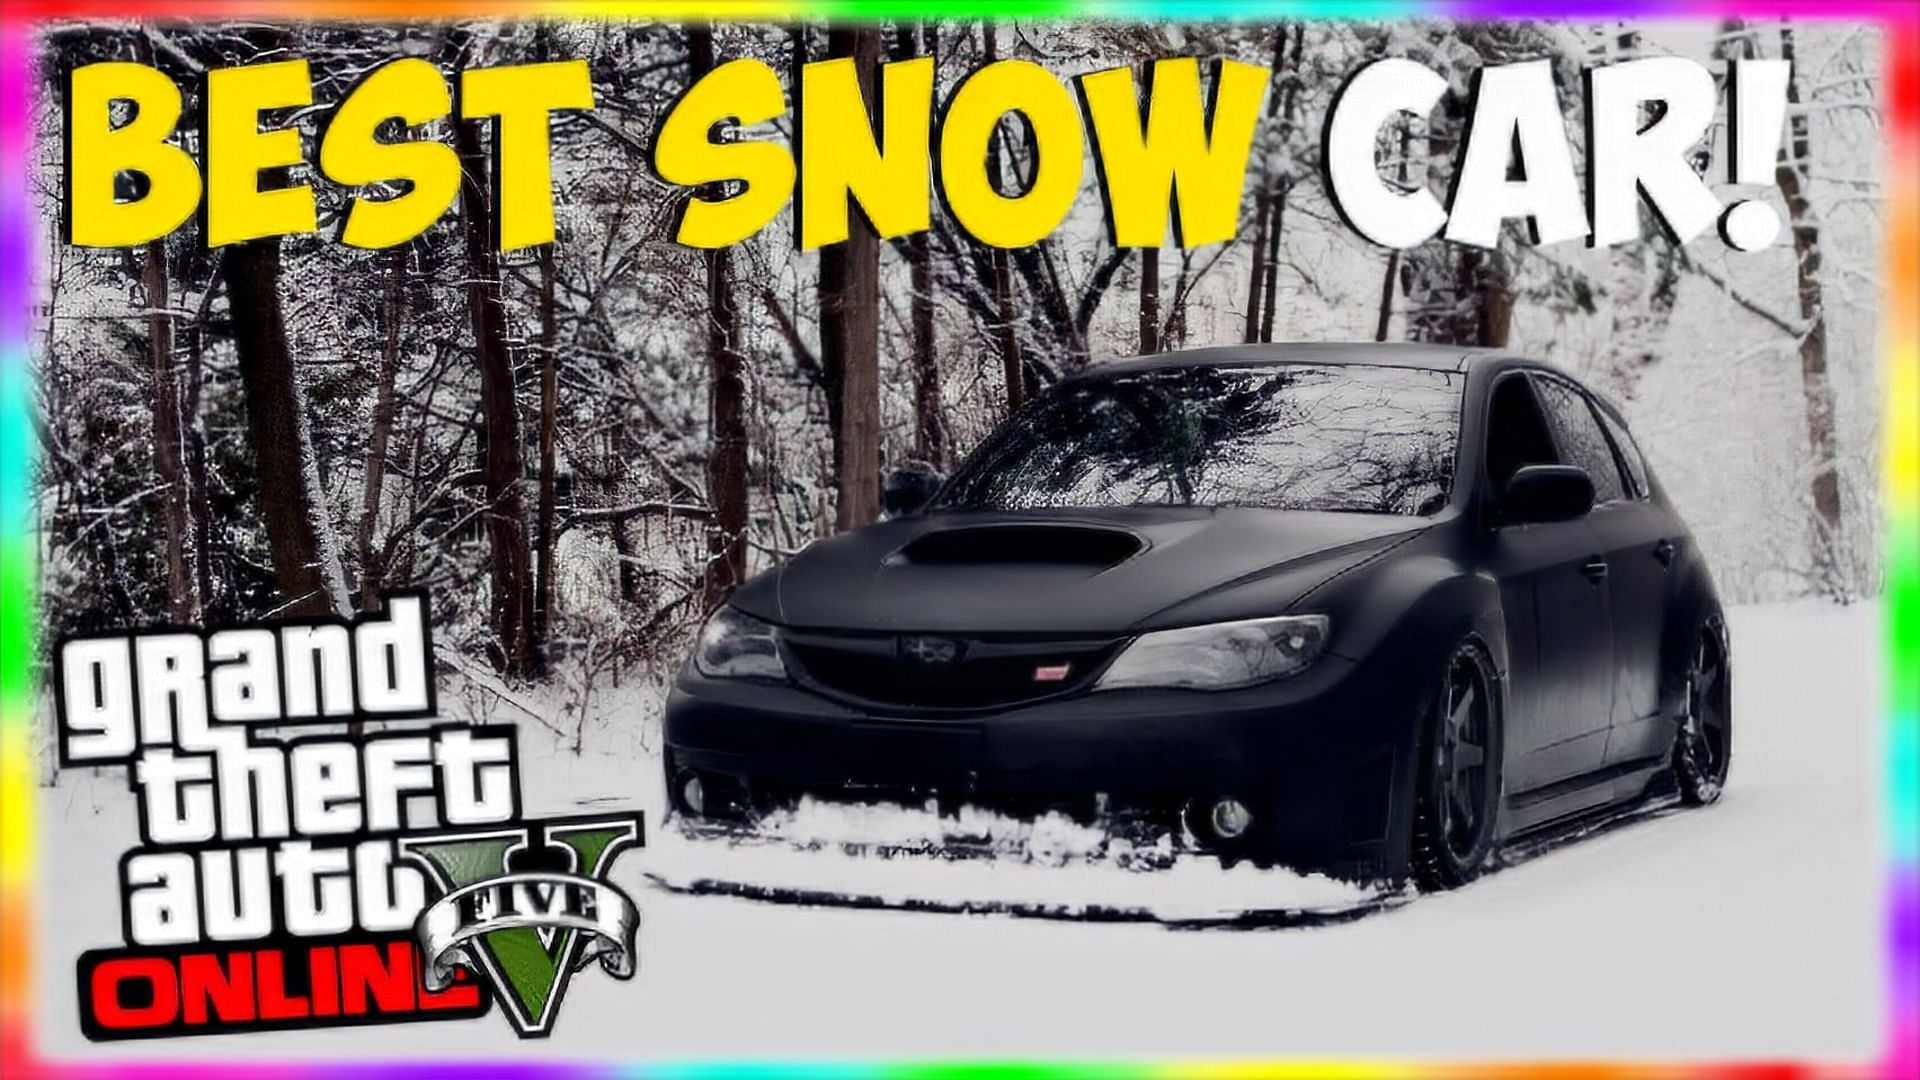 Image showing Best Snow Car GTA Online